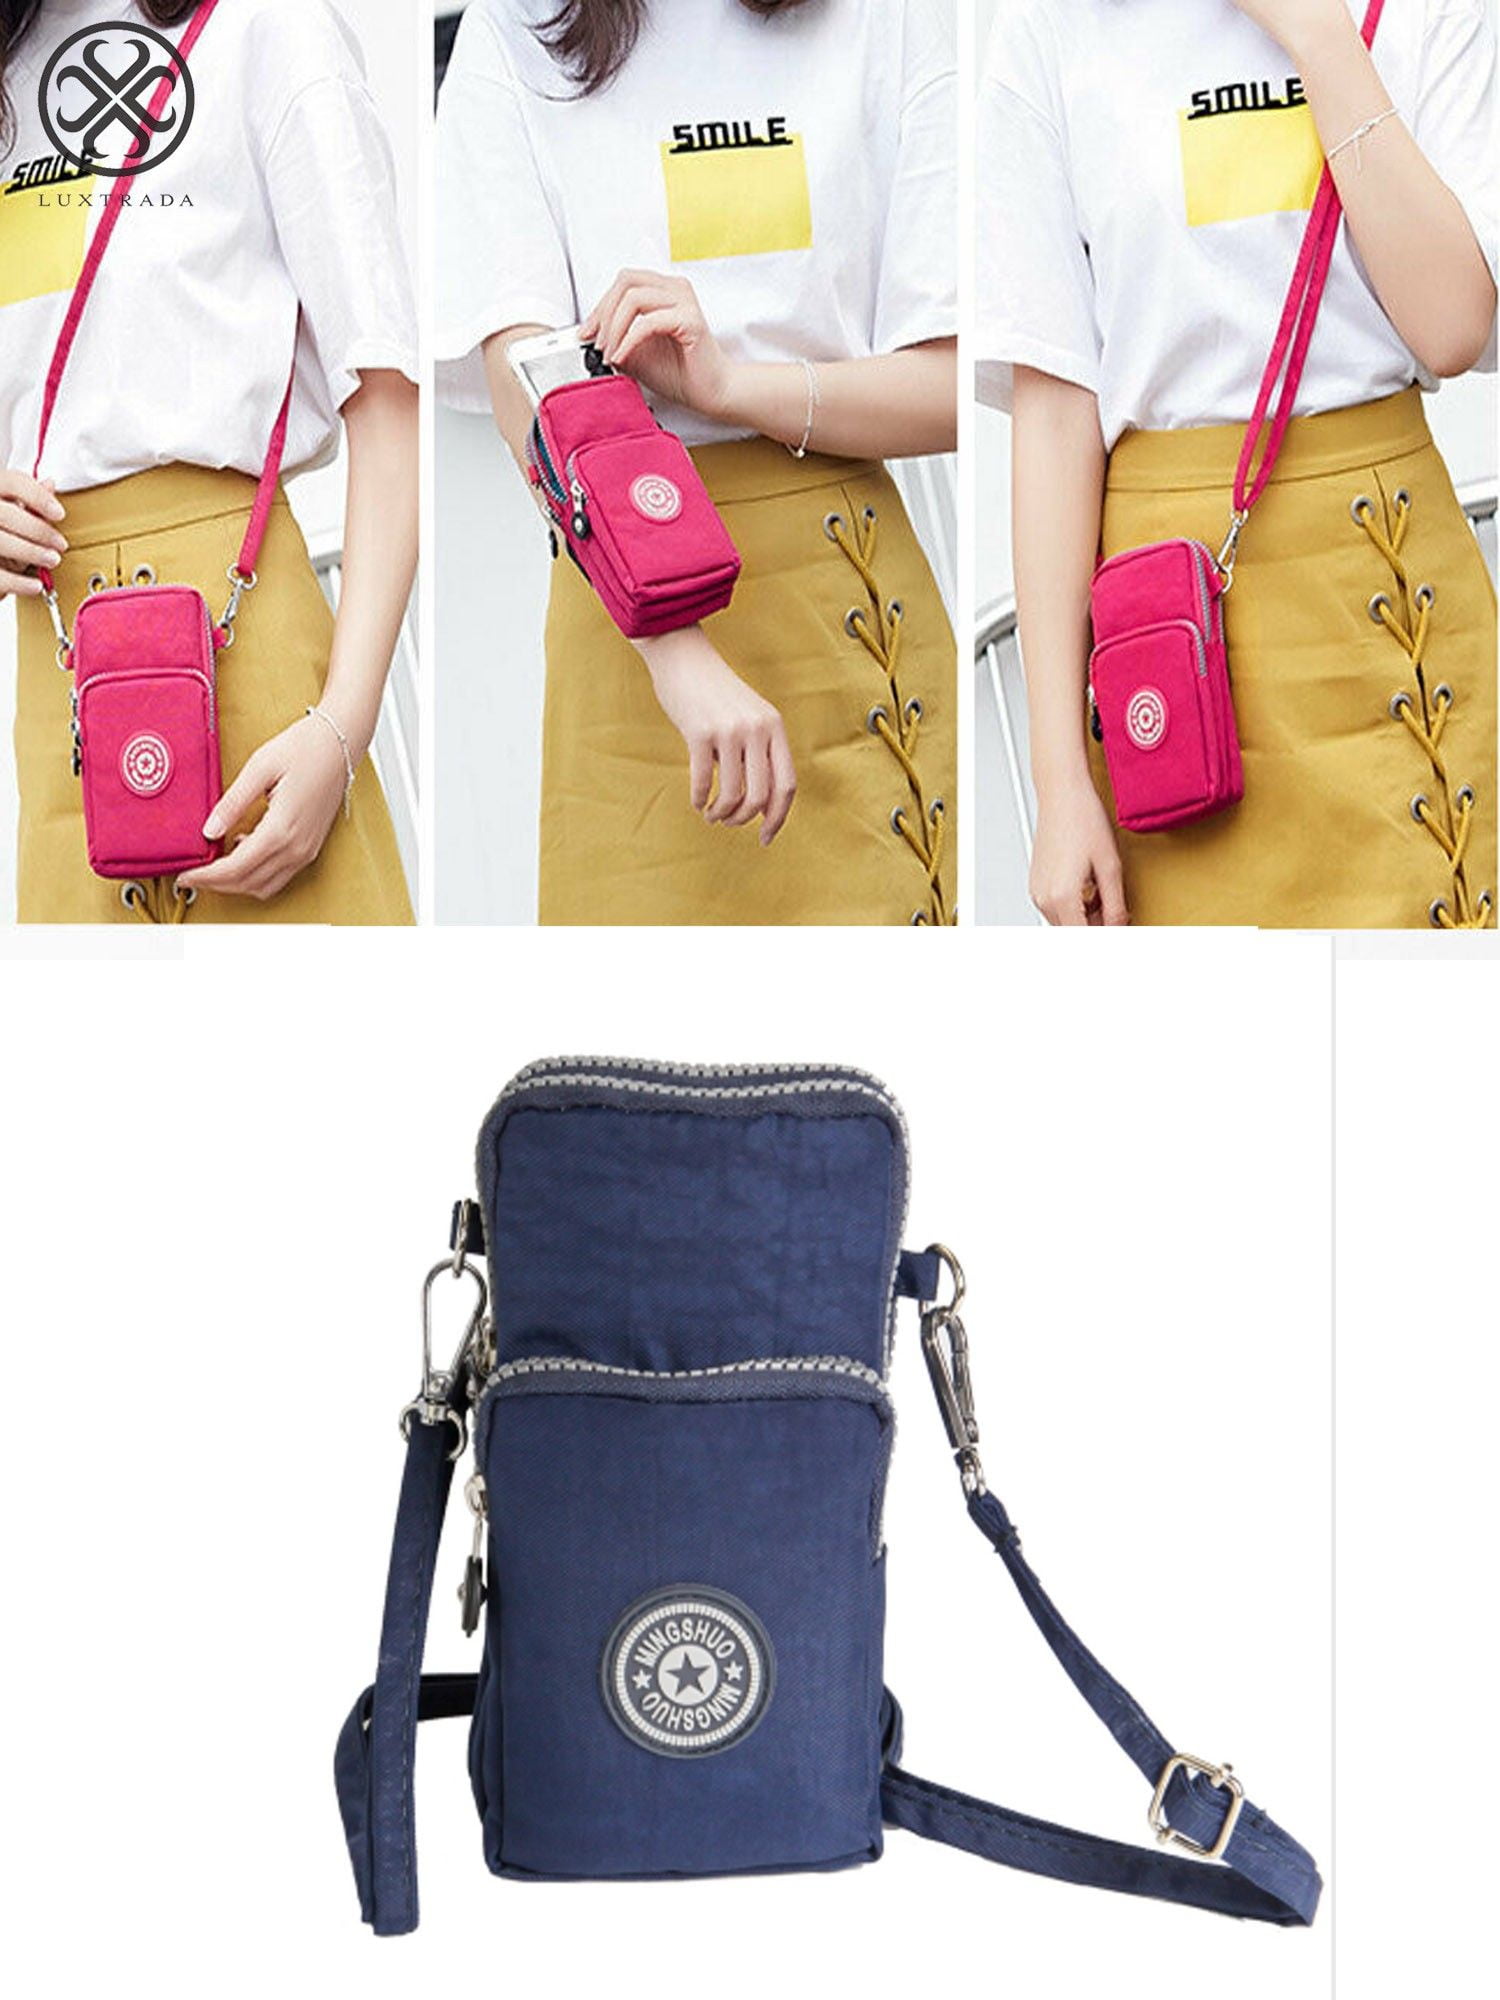 Luxtrada - Luxtrada Waterproof Nylon Crossbody Cell Phone Purse Smartphone Wallet Bag for Women ...